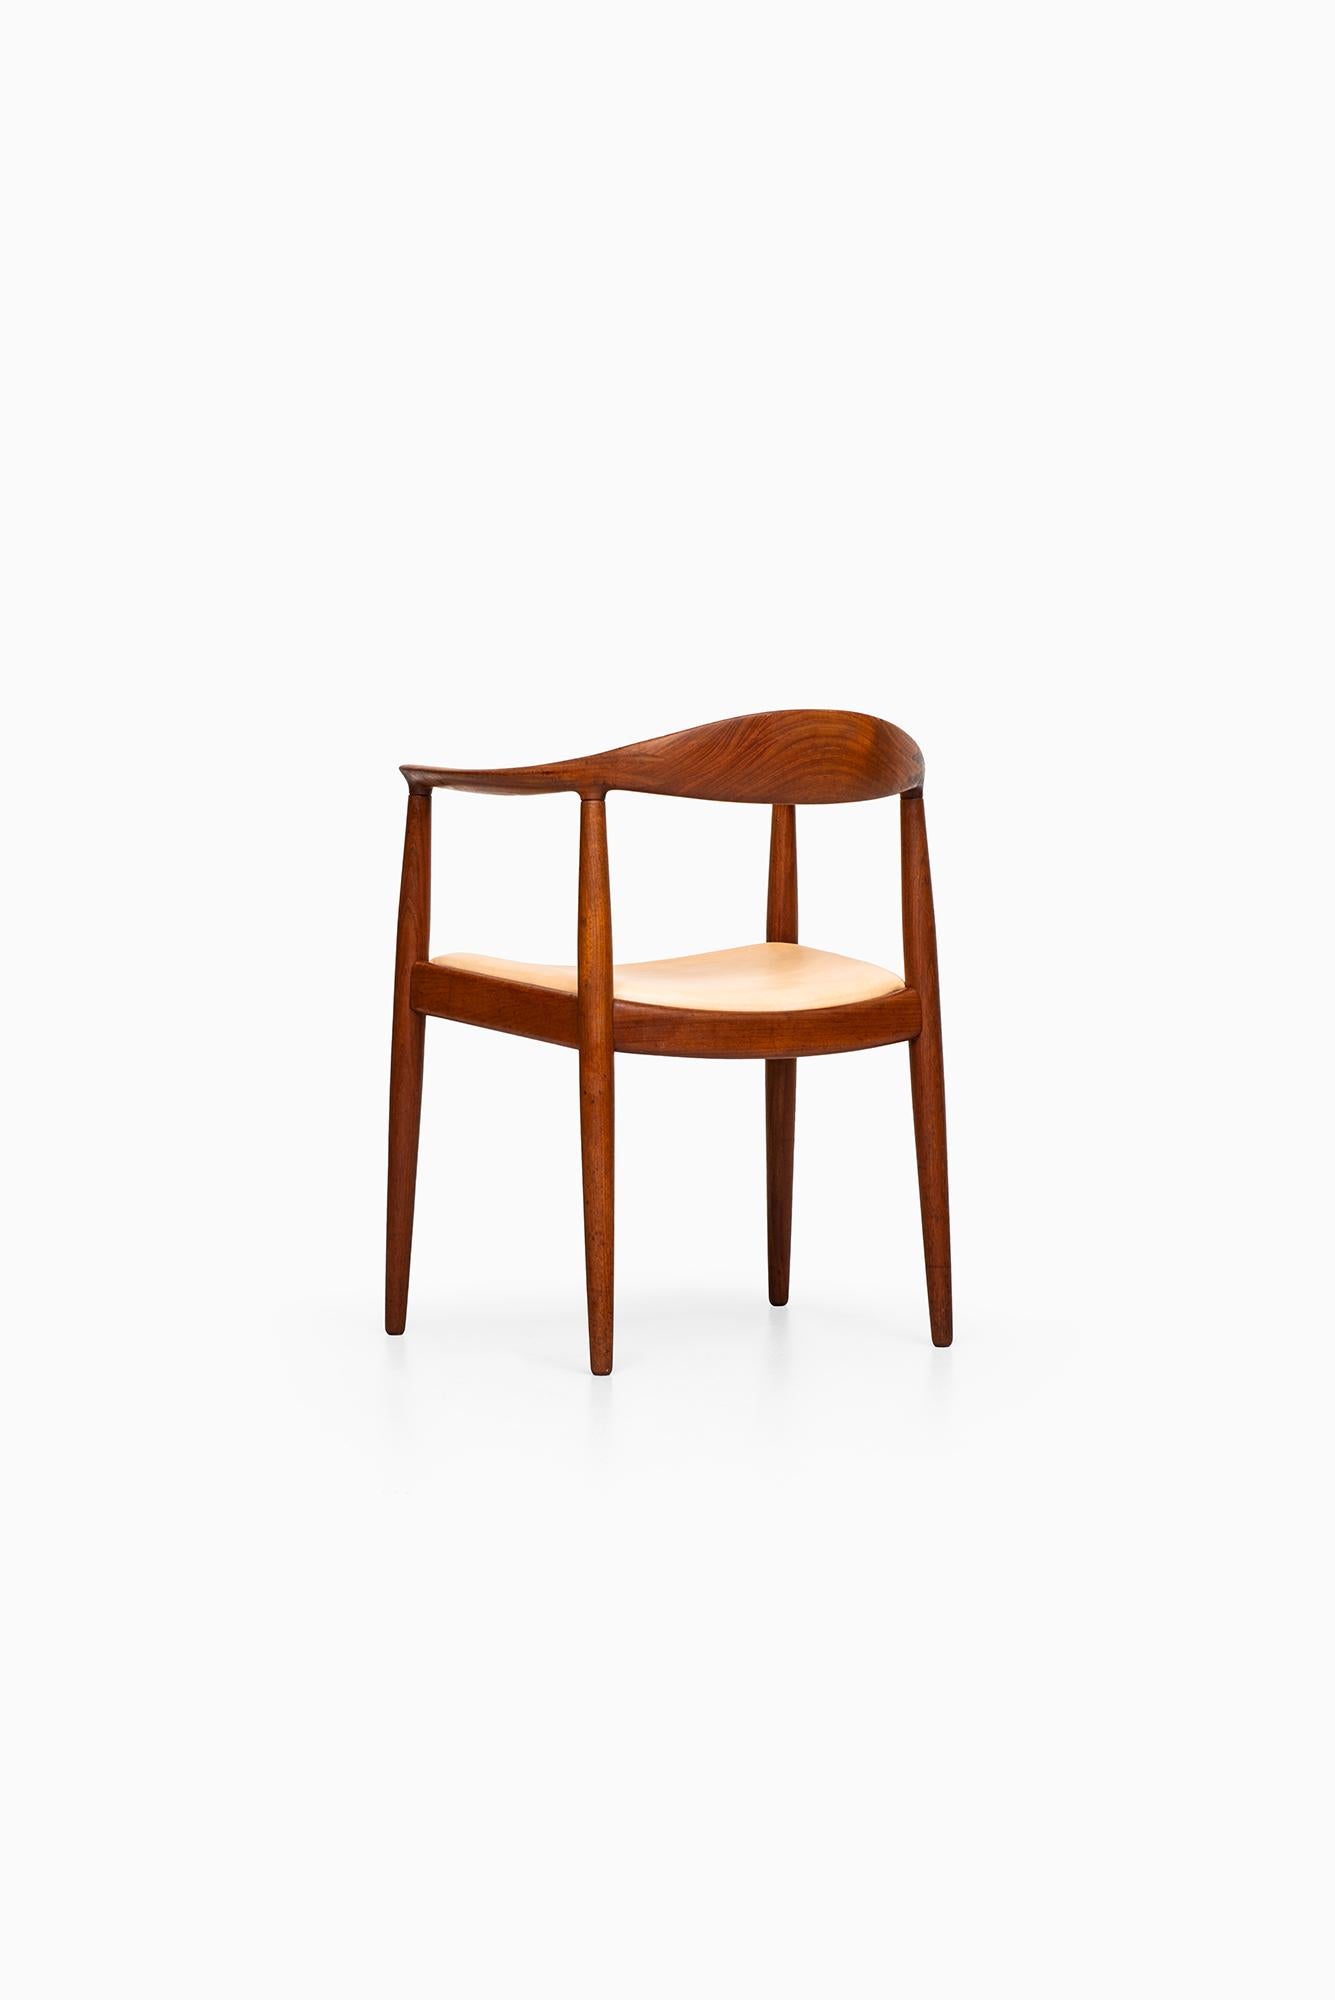 Scandinavian Modern Hans Wegner JH-501 / The Chair by Johannes Hansen in Denmark